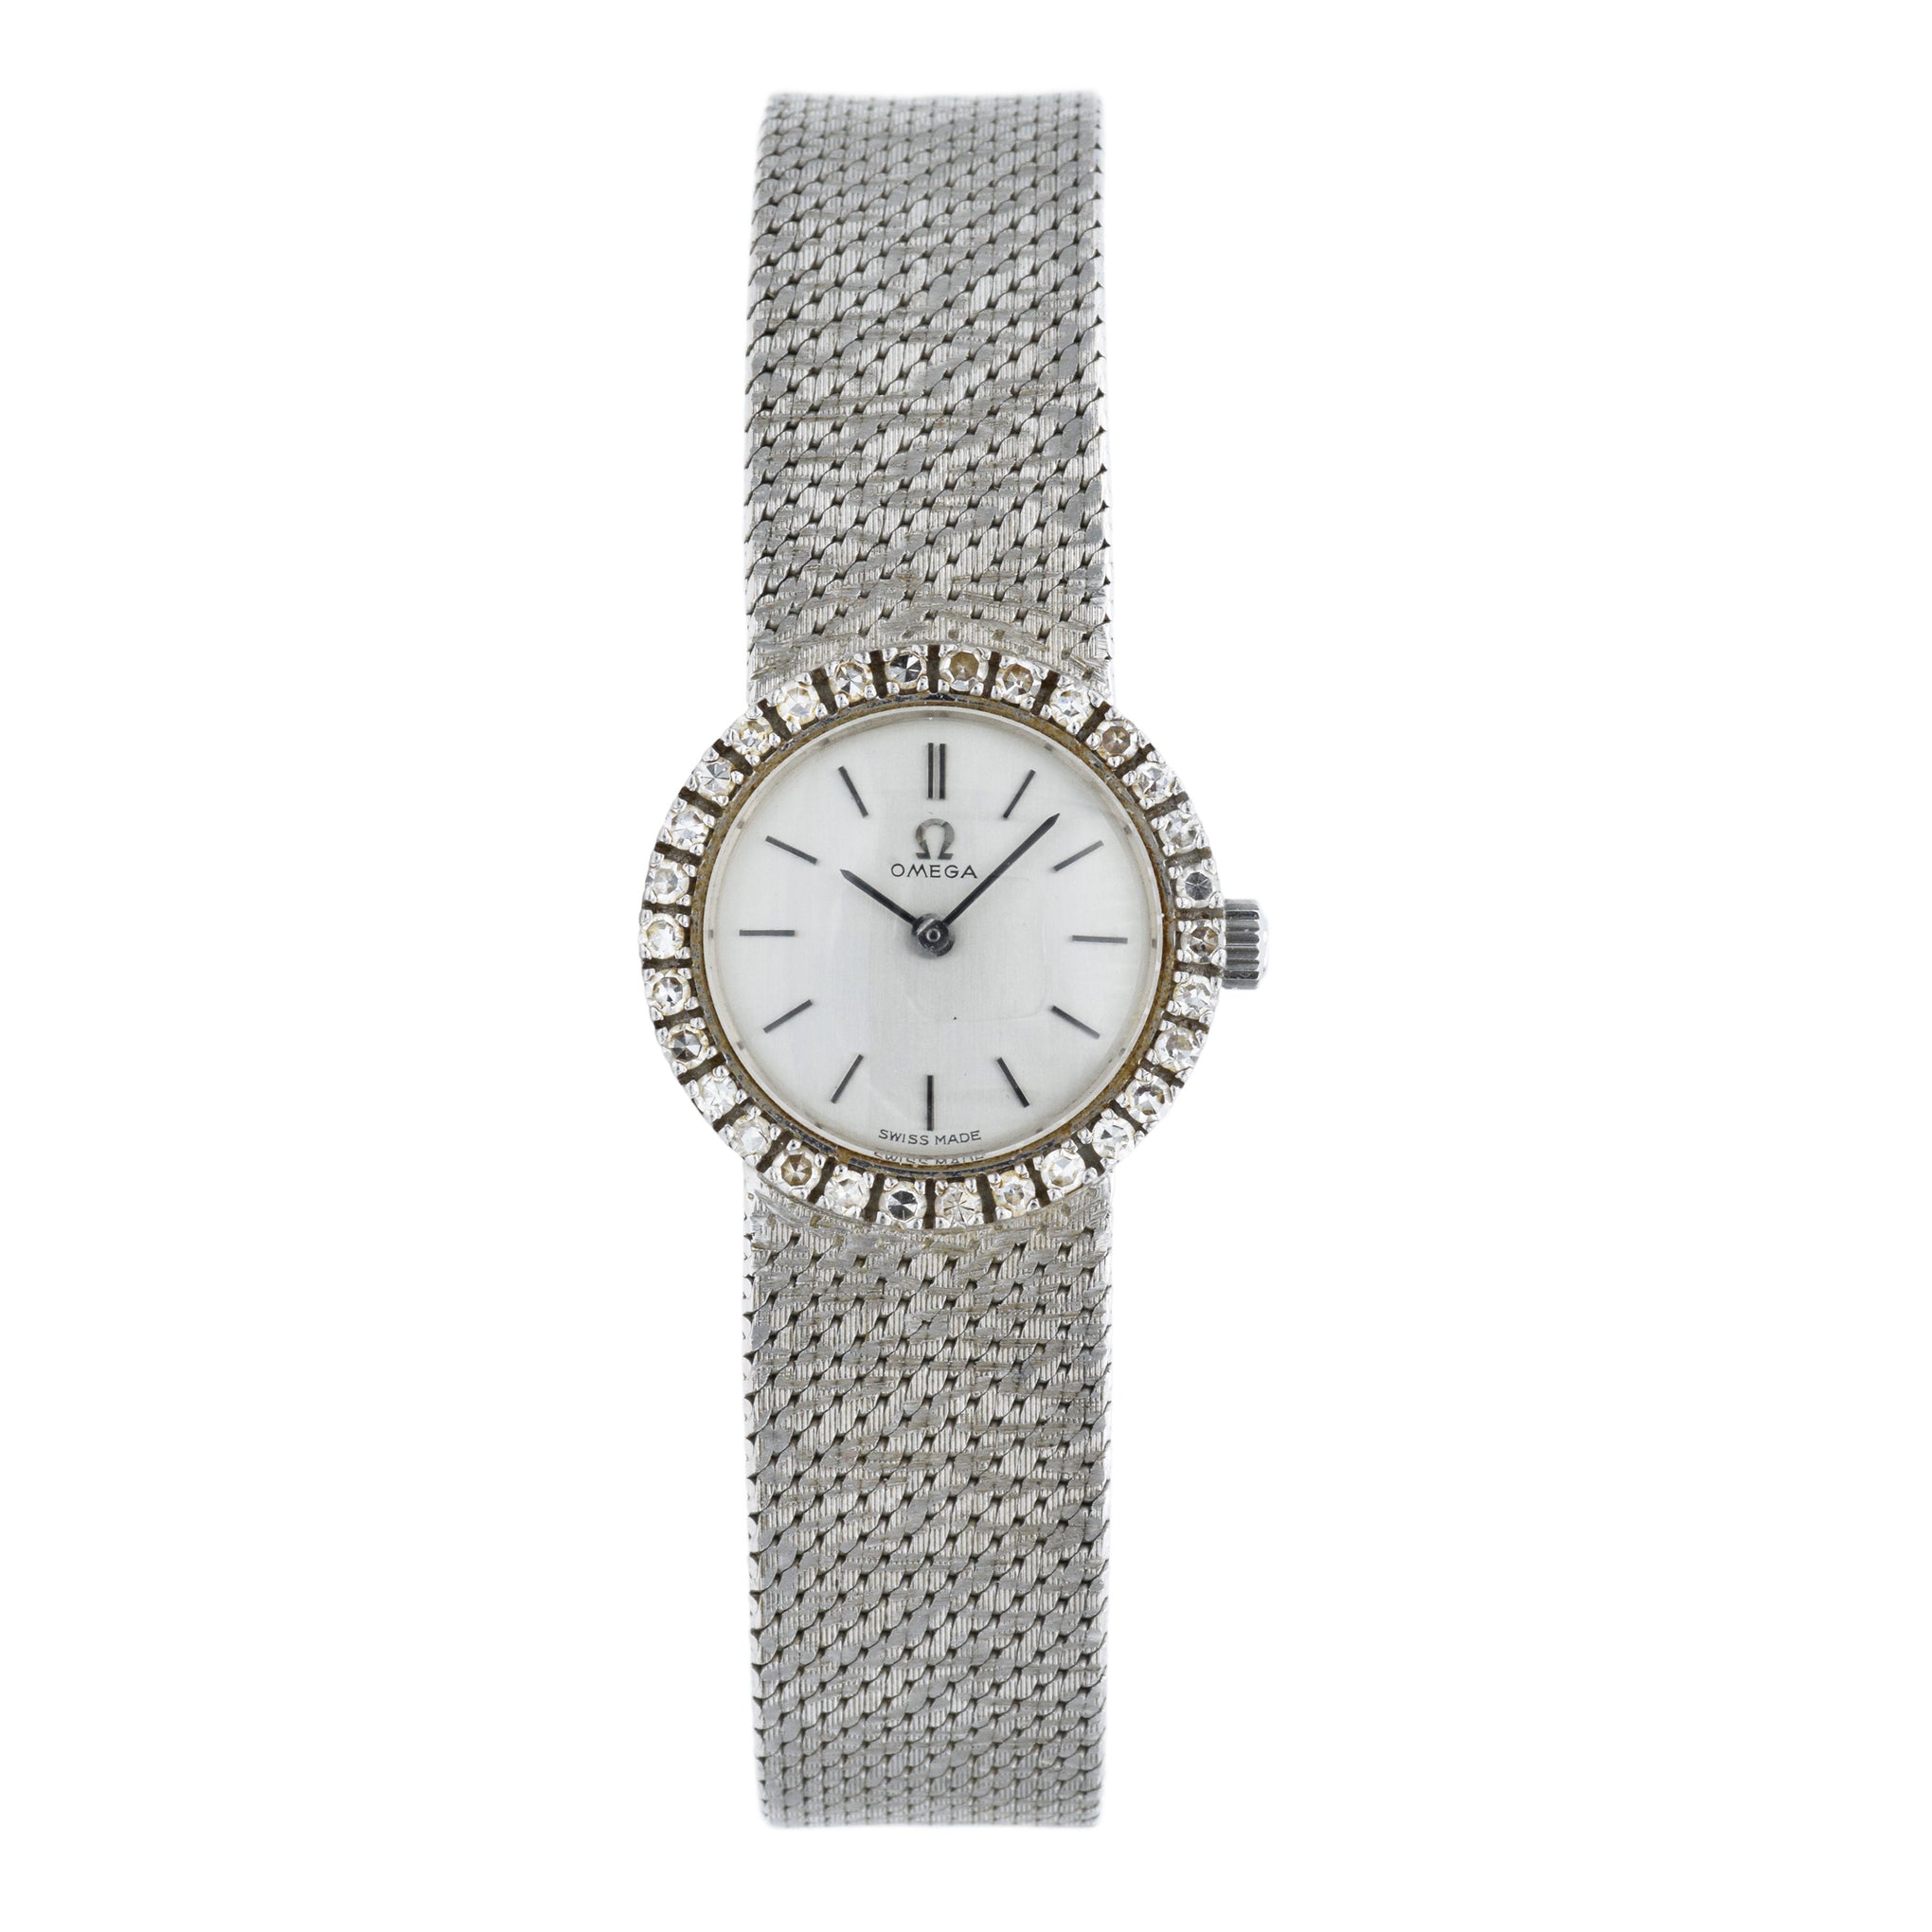 Vintage 1960s Omega Diamond Watch